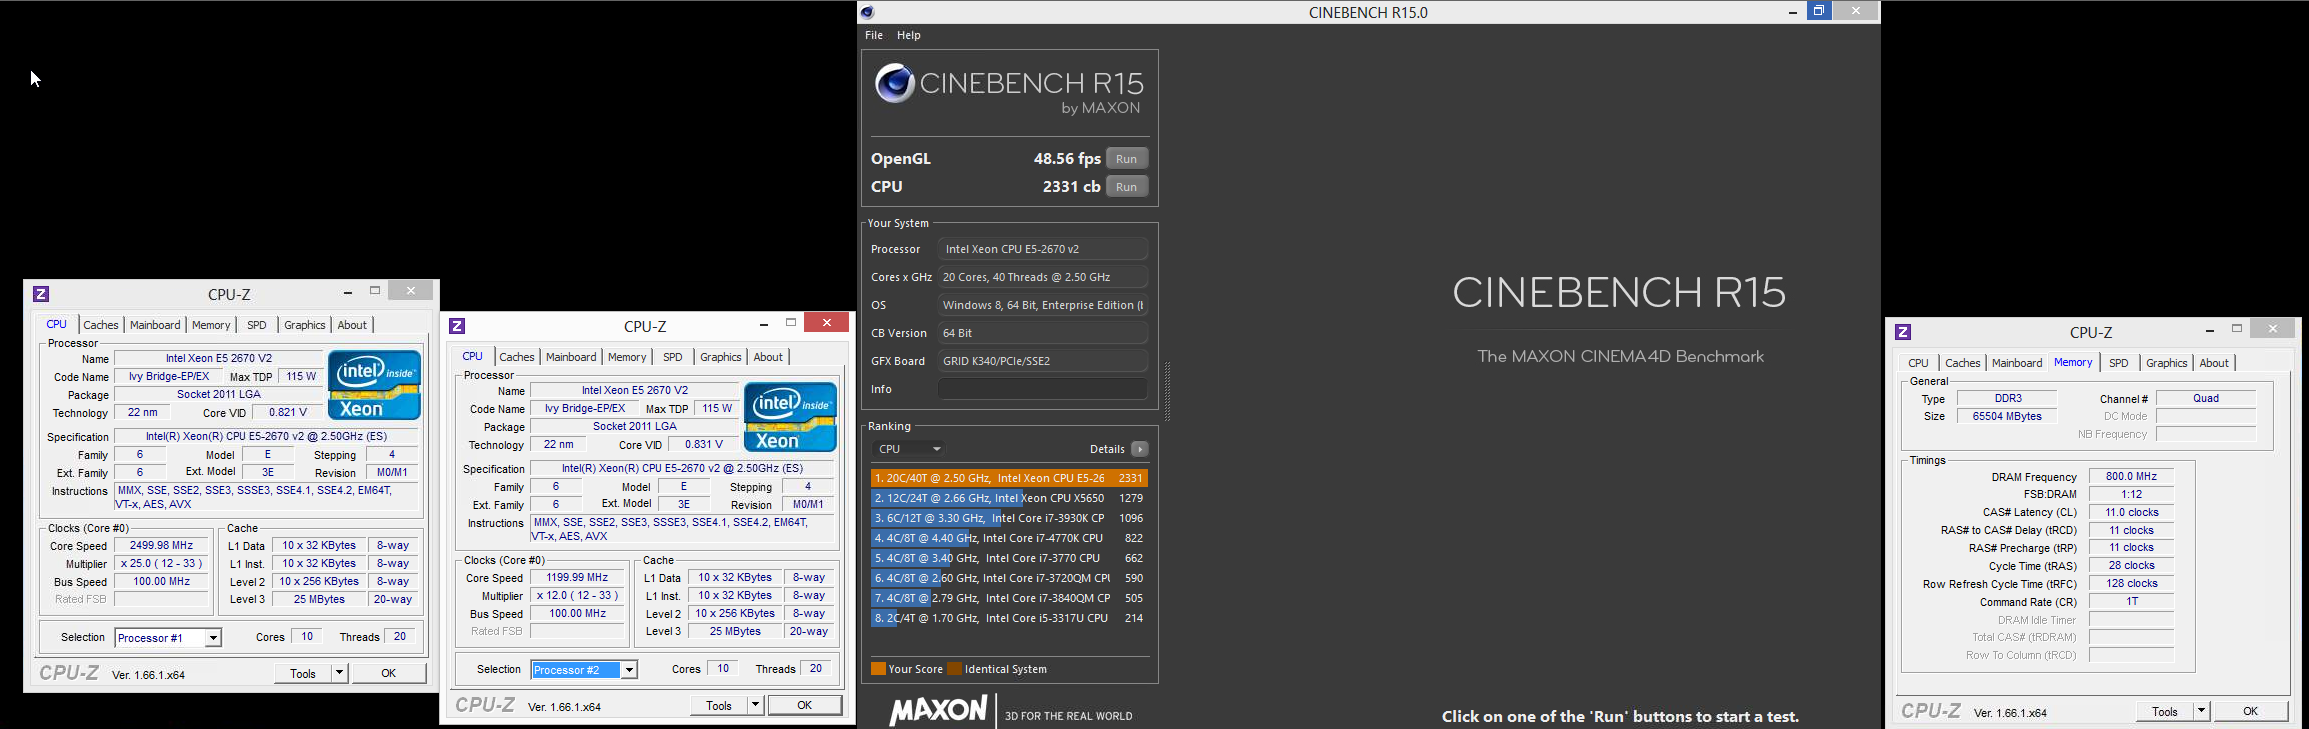 drugol`s Cinebench - R15 score: 2331 cb with a Xeon E5 2670 v2